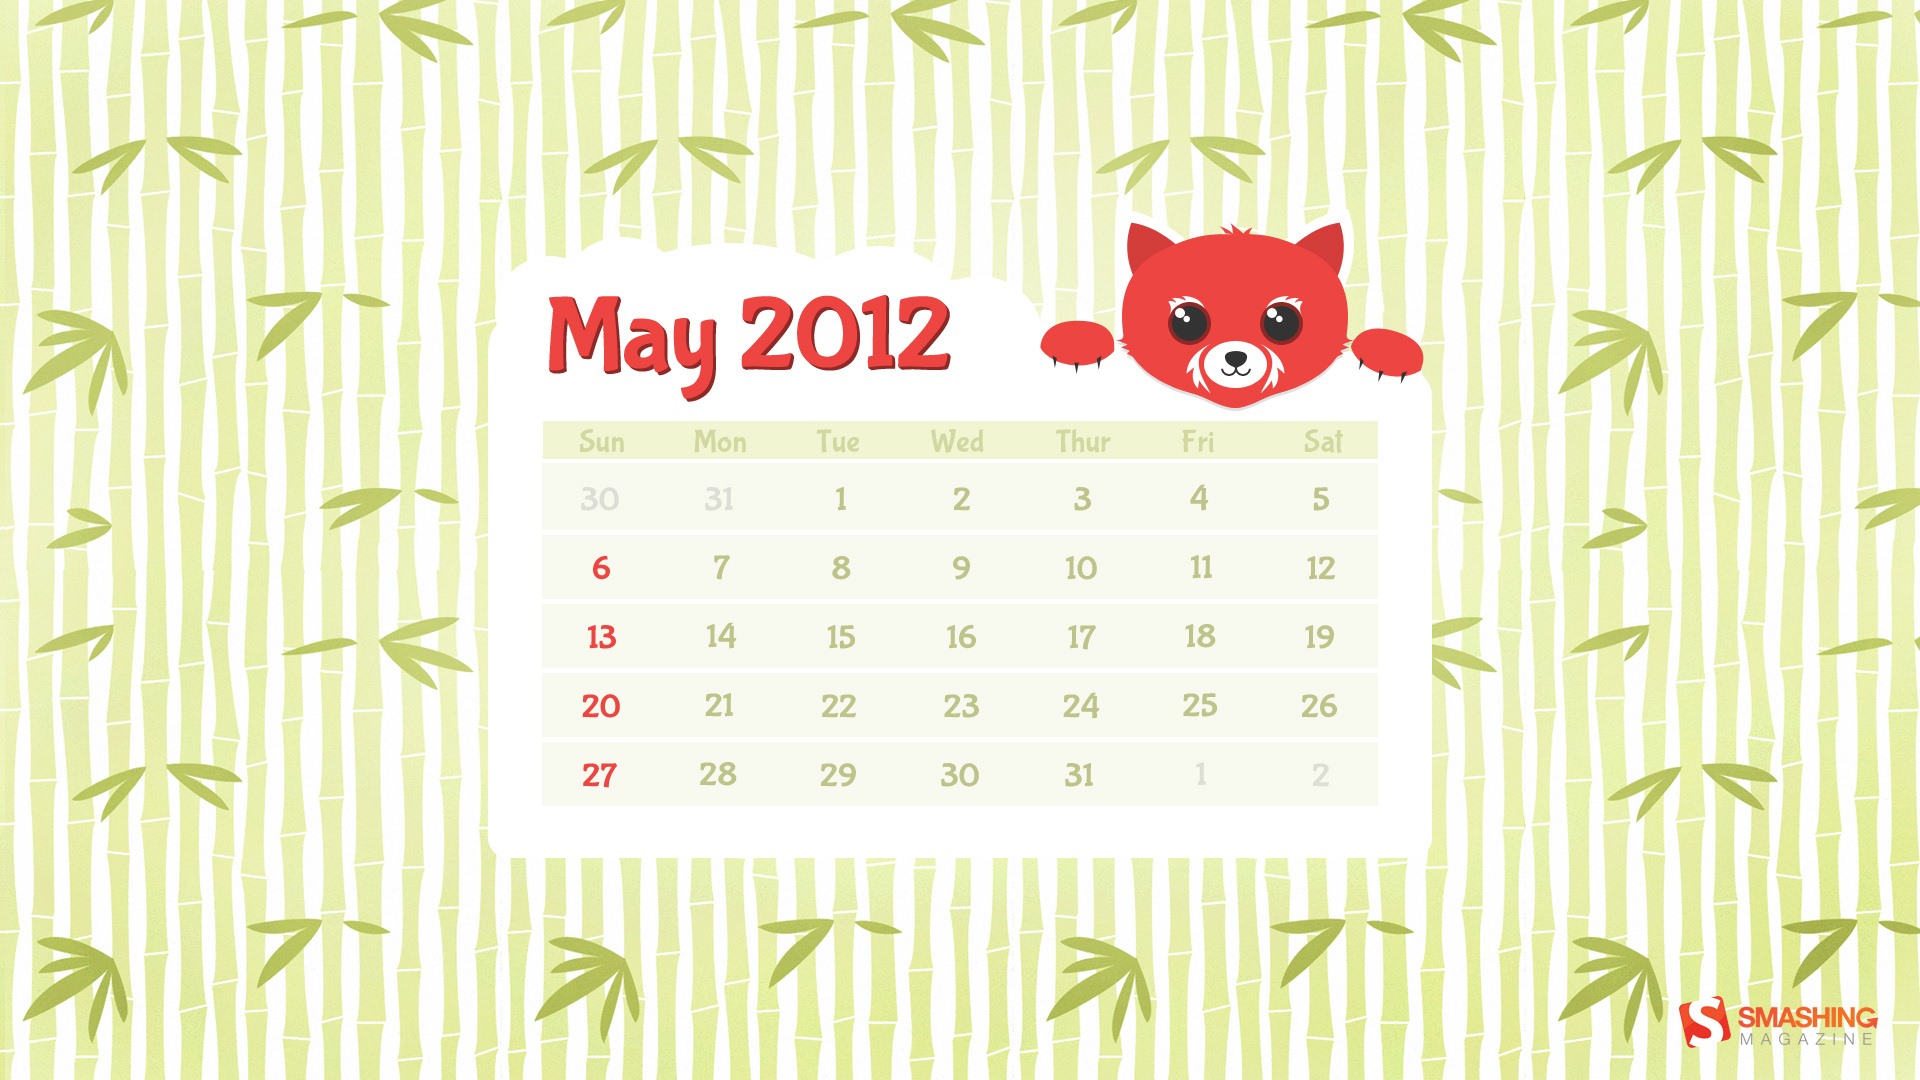 Mai 2012 fonds d'écran calendrier (2) #6 - 1920x1080